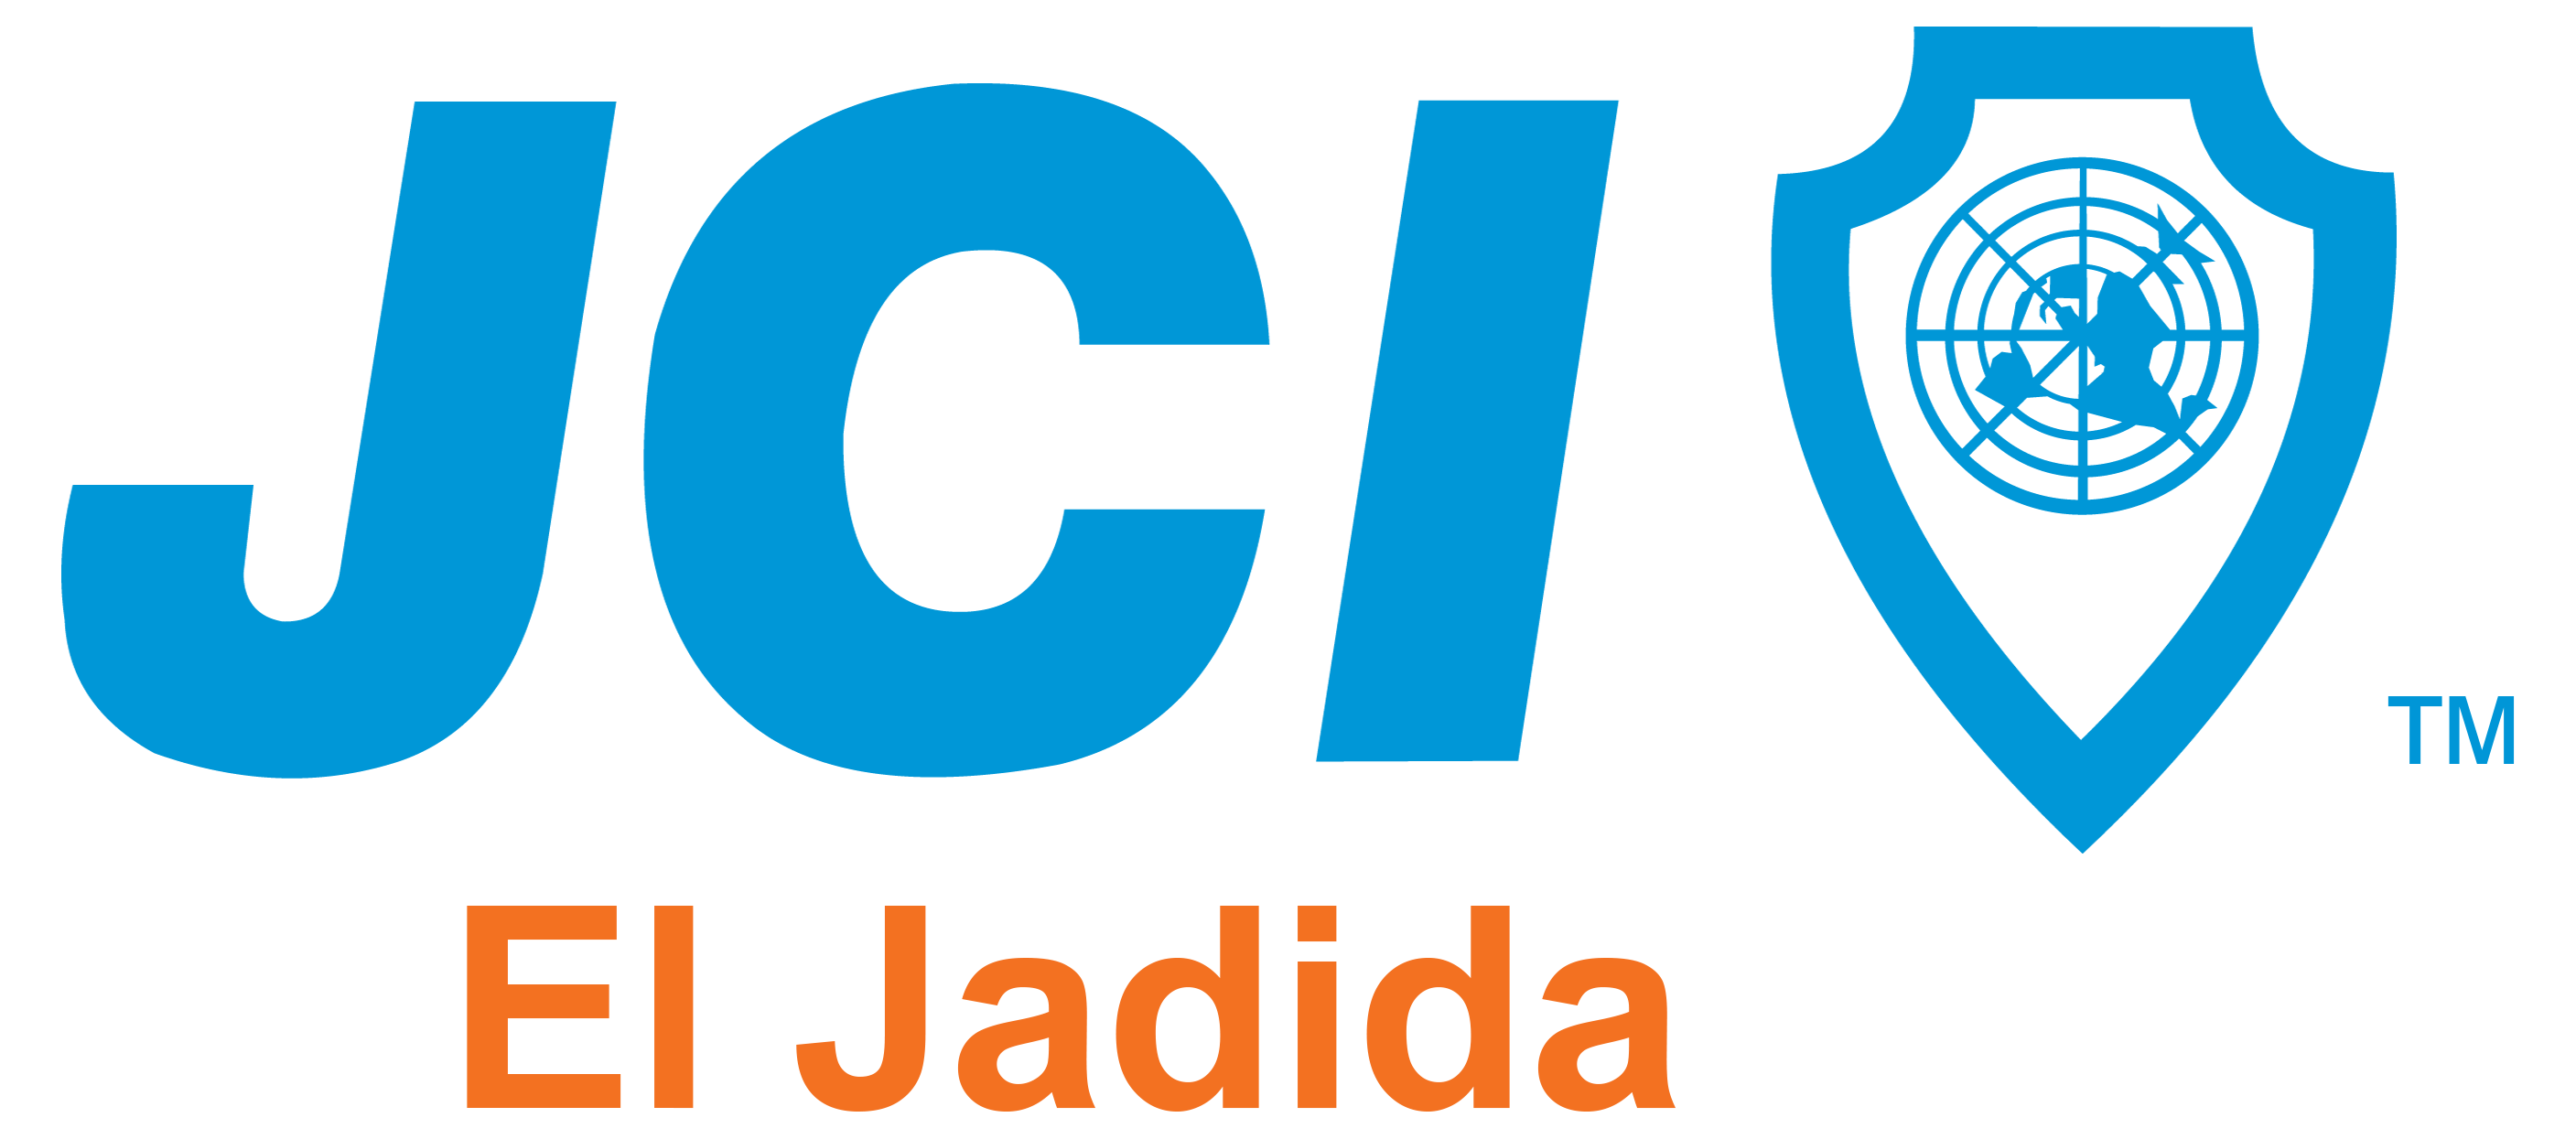 JCI El Jadida